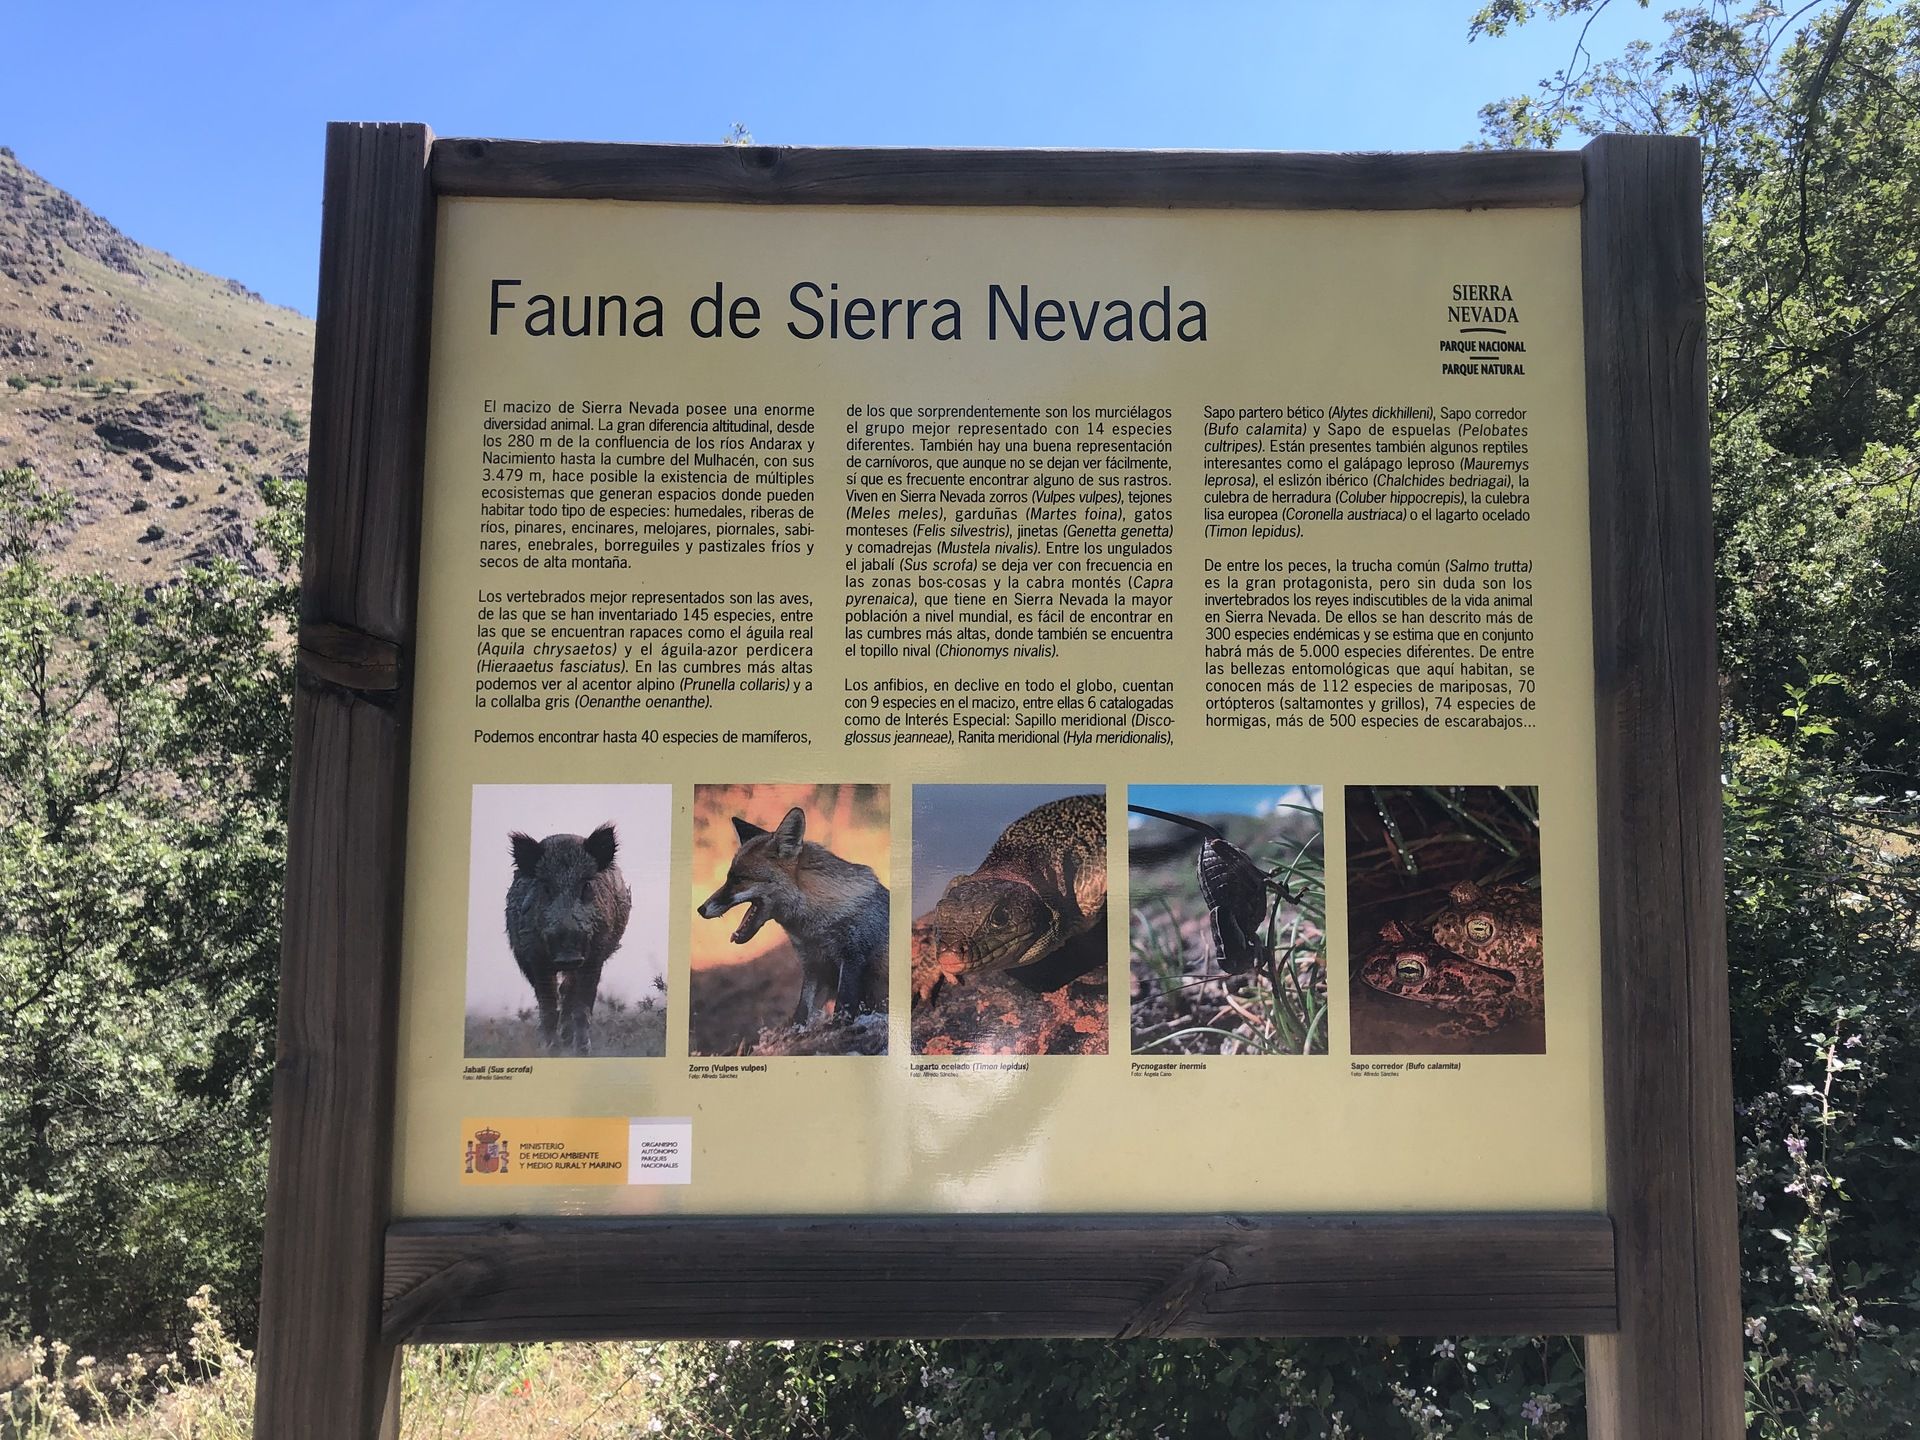 Fauna de Sierra Nevada